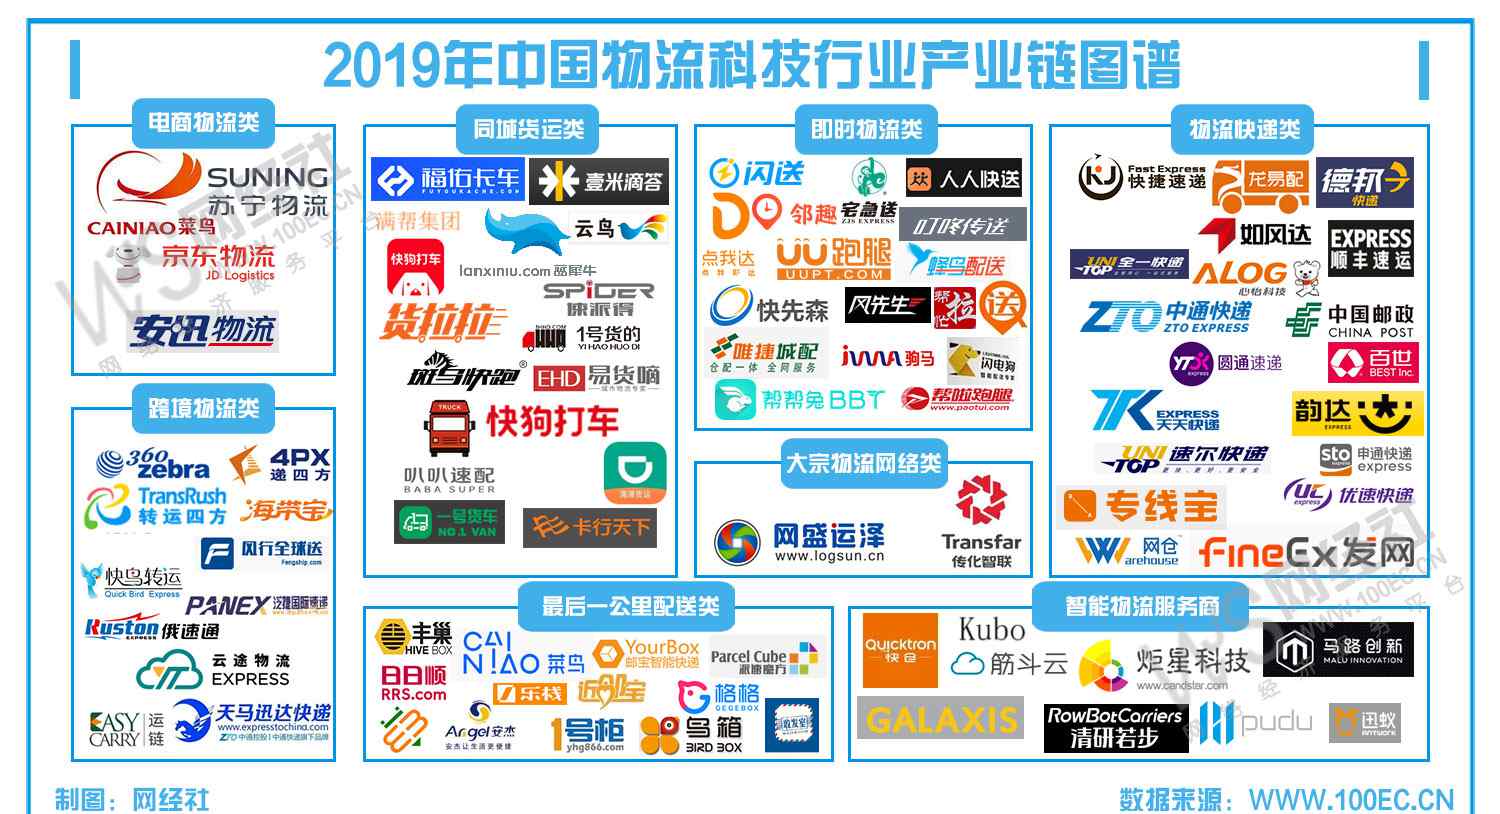 360hitao 2019年电商物流TOP10消费评级榜 百世快递 U2C快递 点我达等上榜